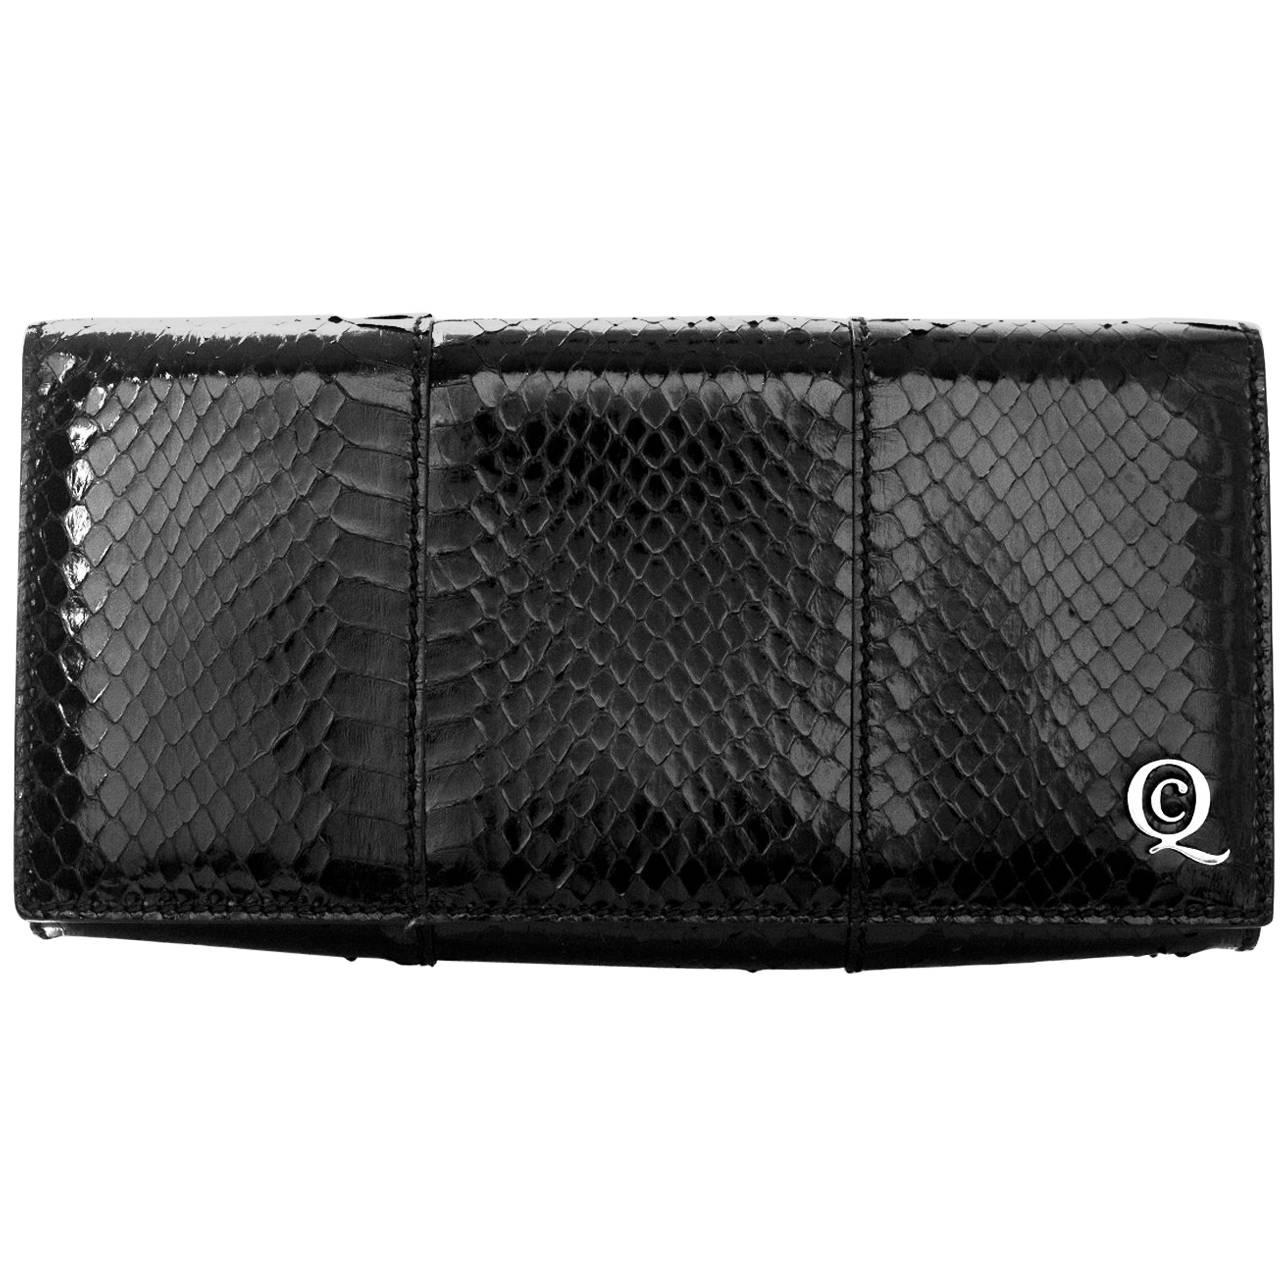 Alexander McQueen Black Python Clutch Bag